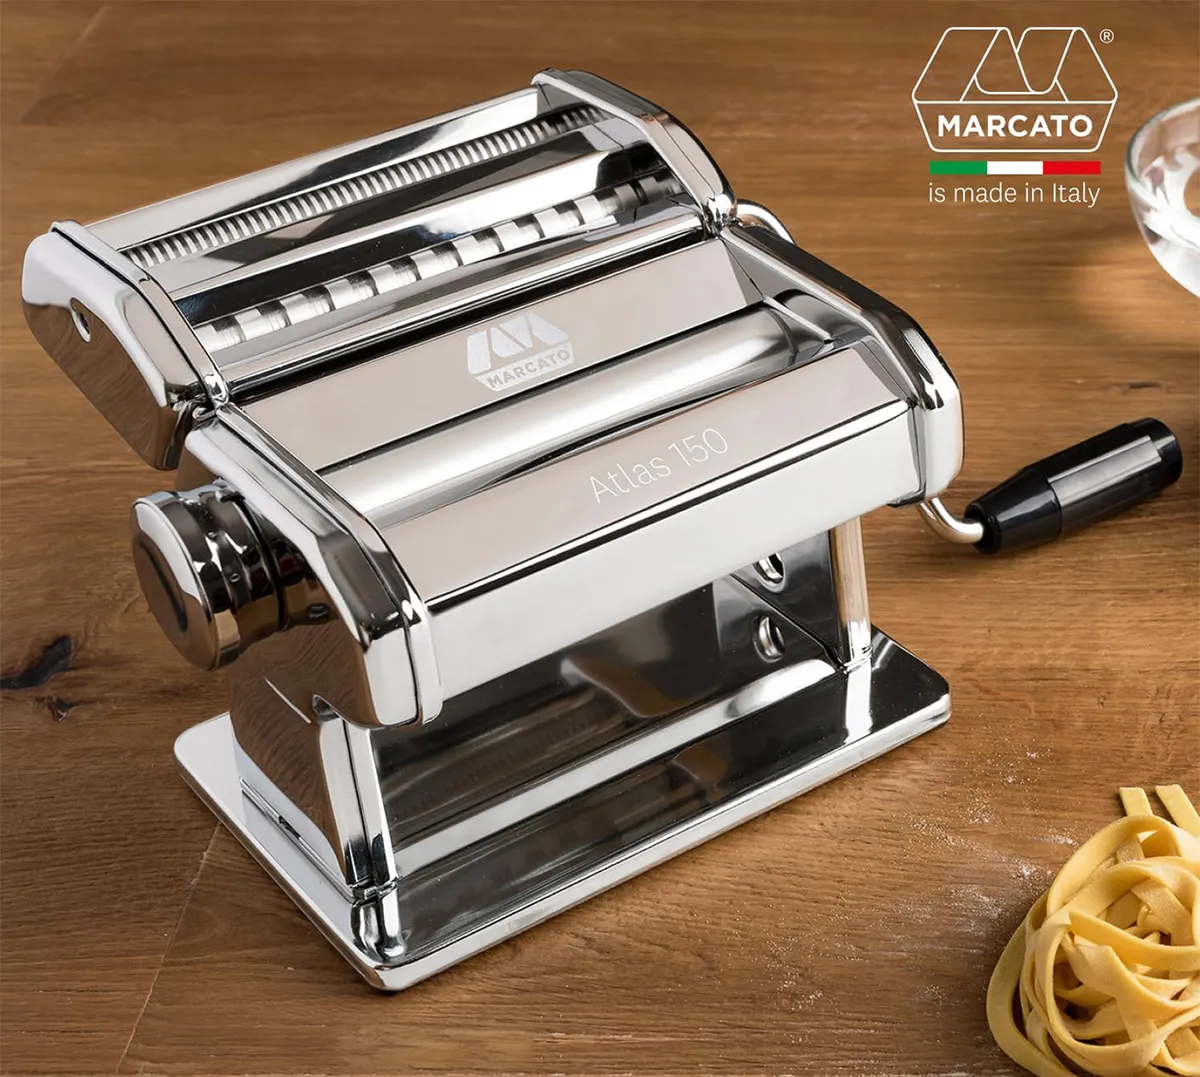 Maracato Atlas 150 pasta machine